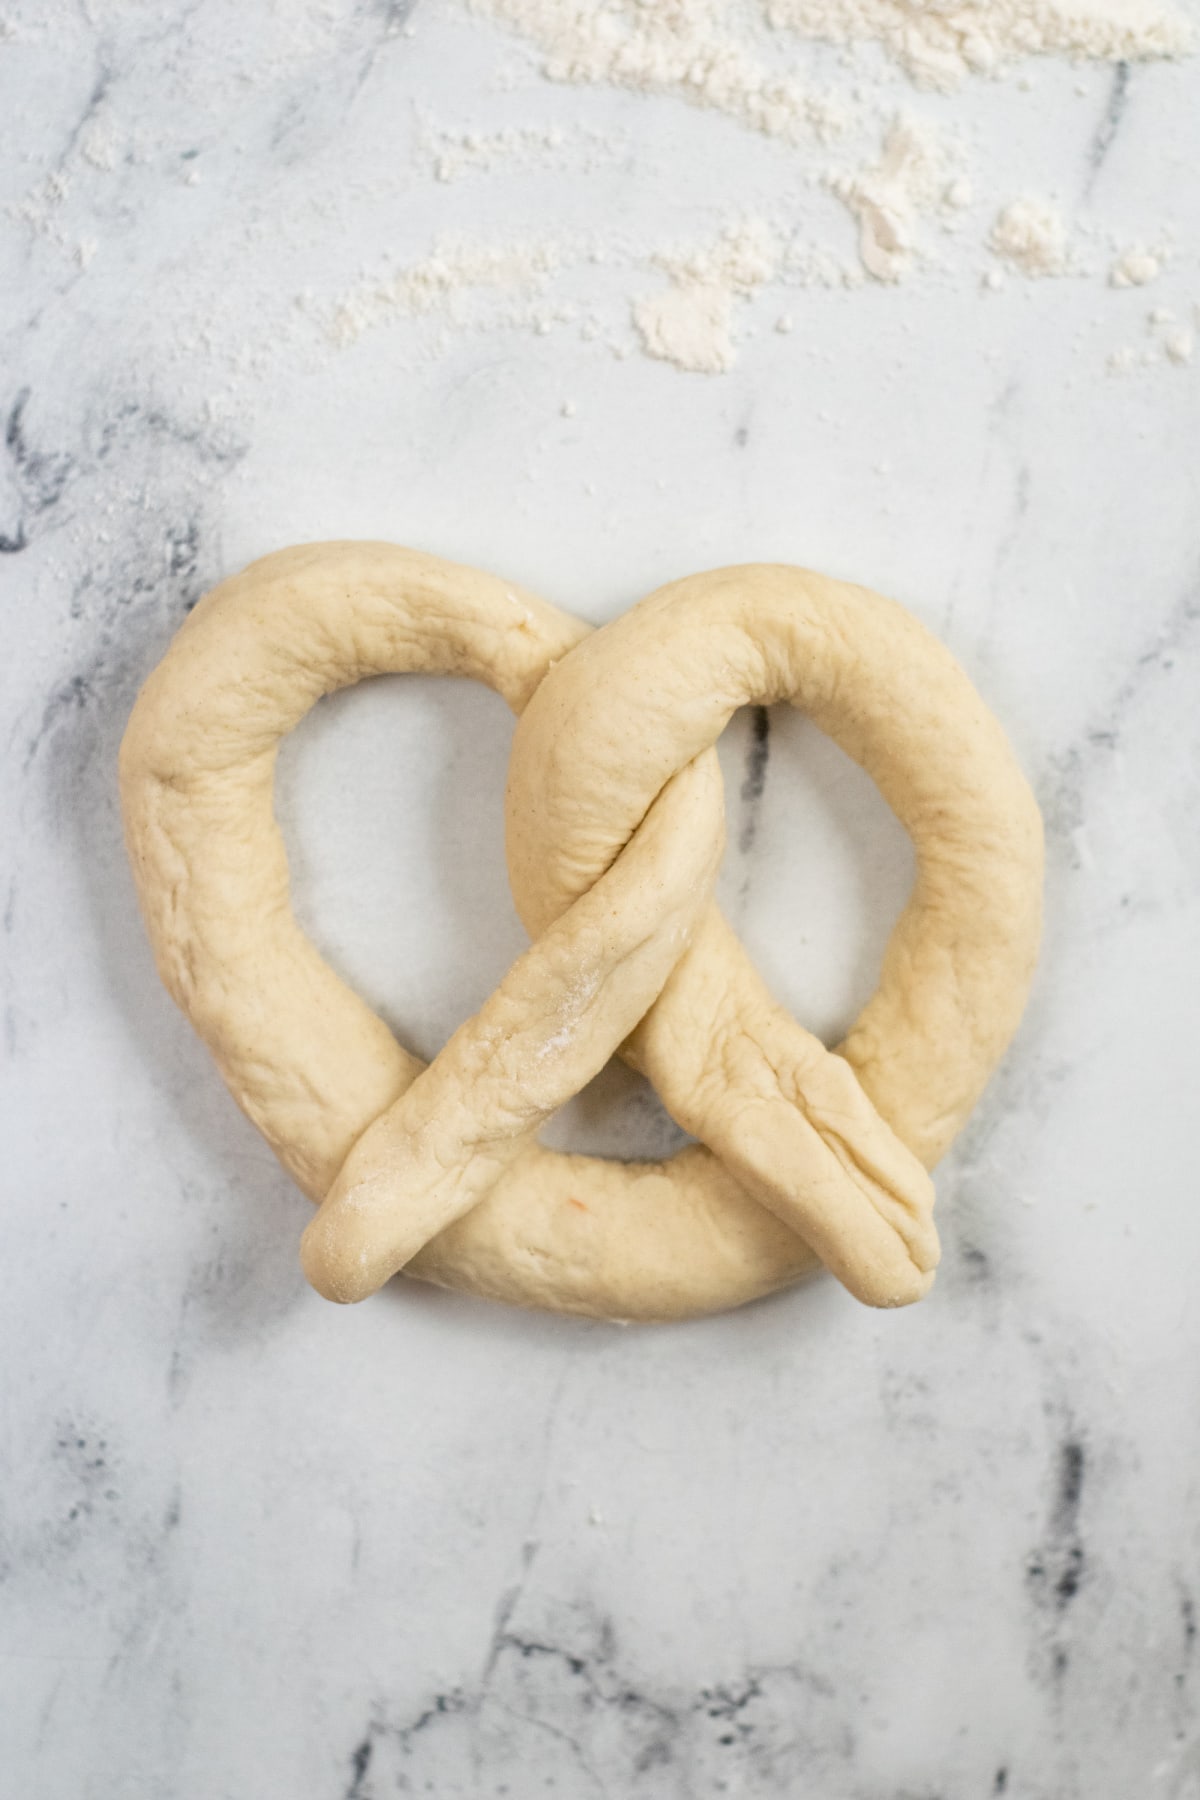 Dough shaped into a pretzel shape